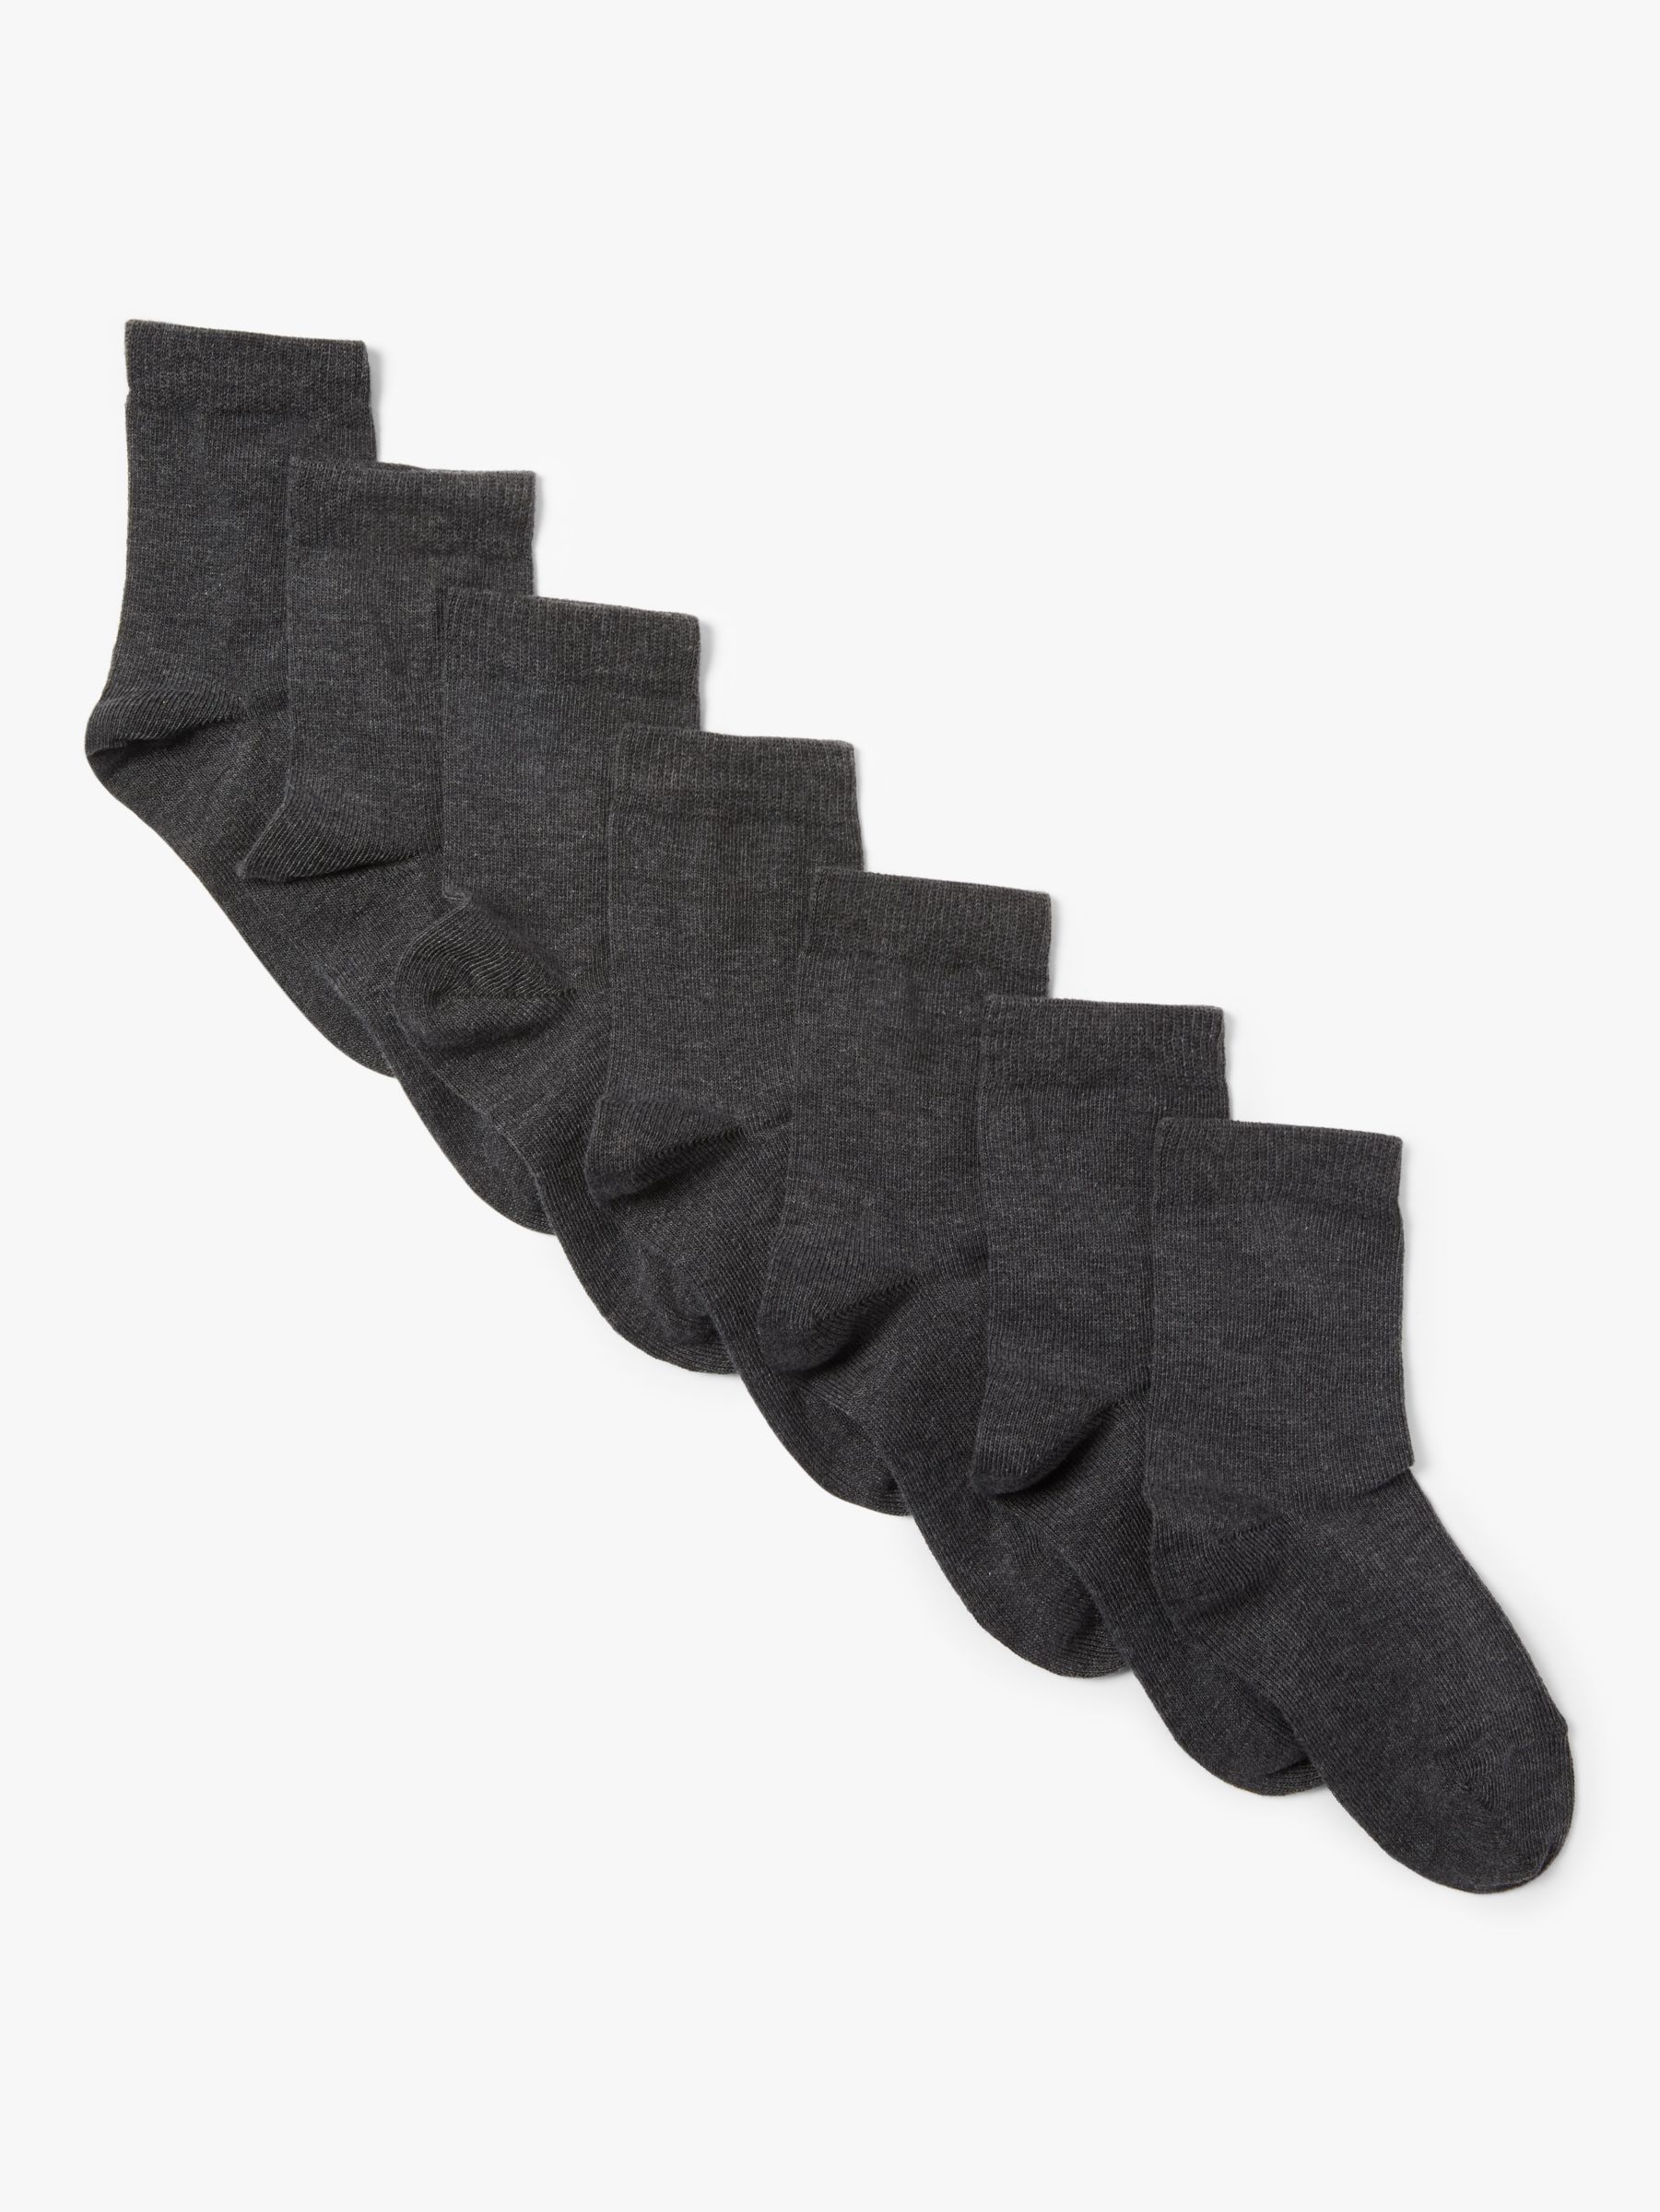 John Lewis Kids' Cotton Rich Socks, Pack of 7, Charcoal, 4-7